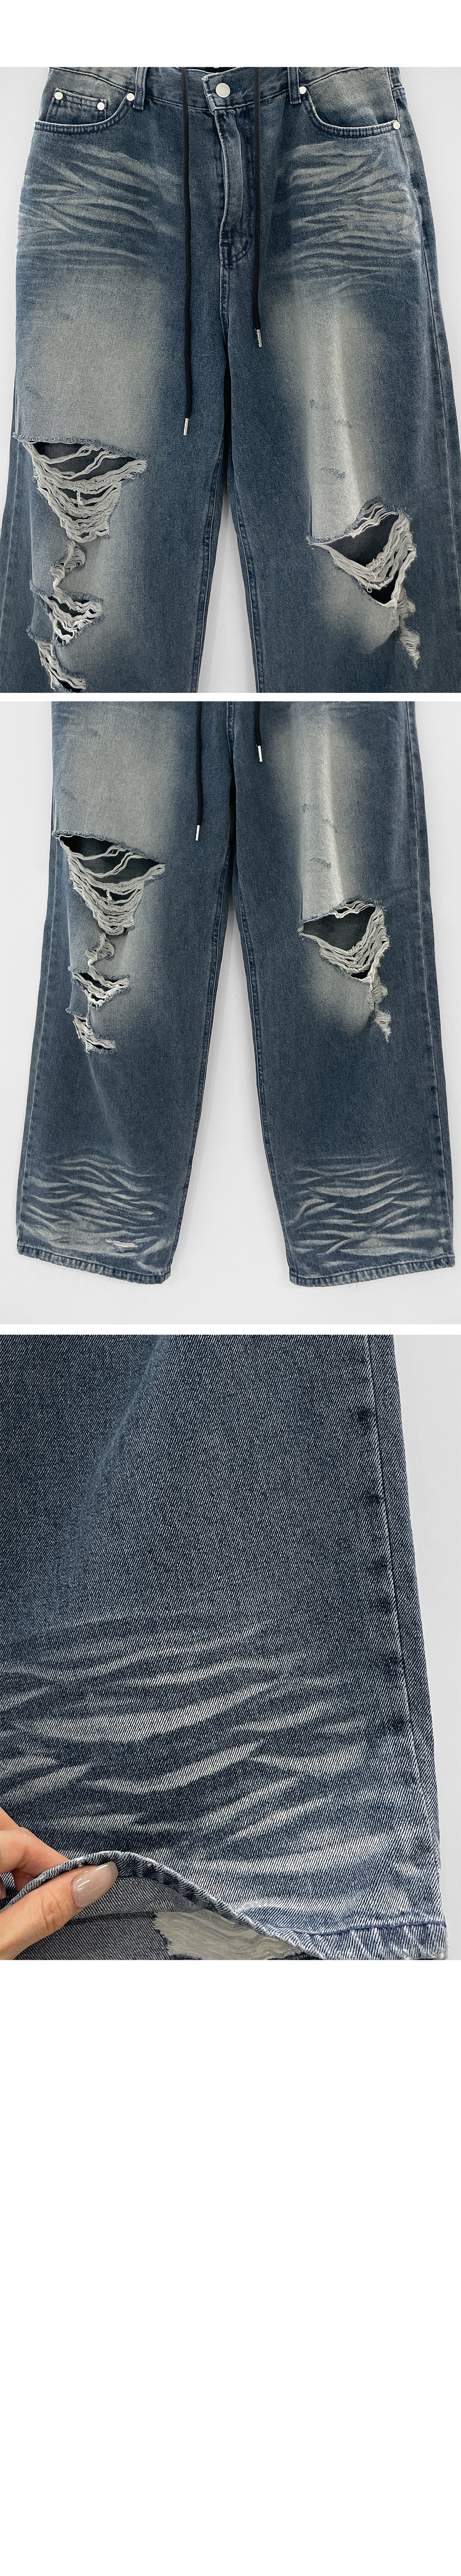 shorts khaki color image-S1L11